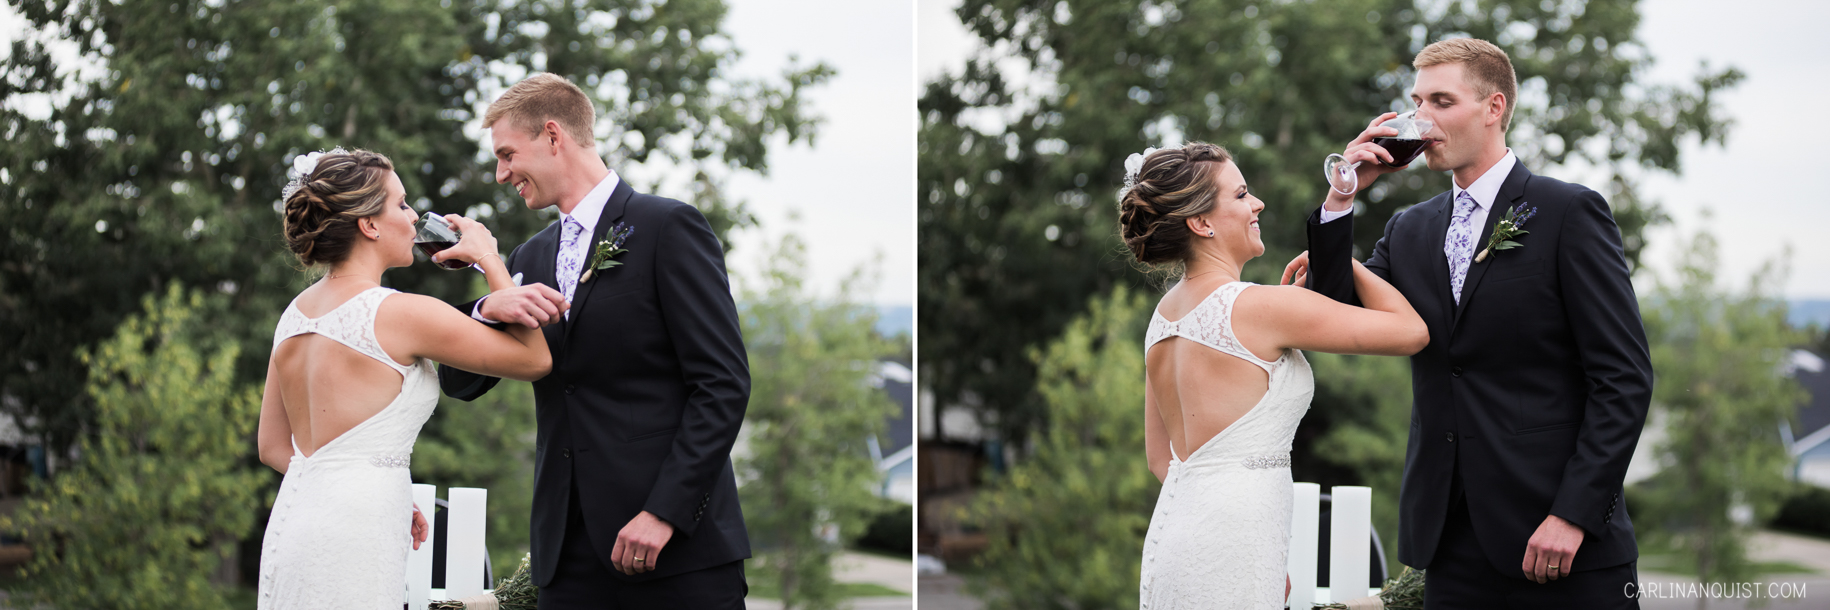 Wedding Wine Ceremony | Calgary Wedding Photographer